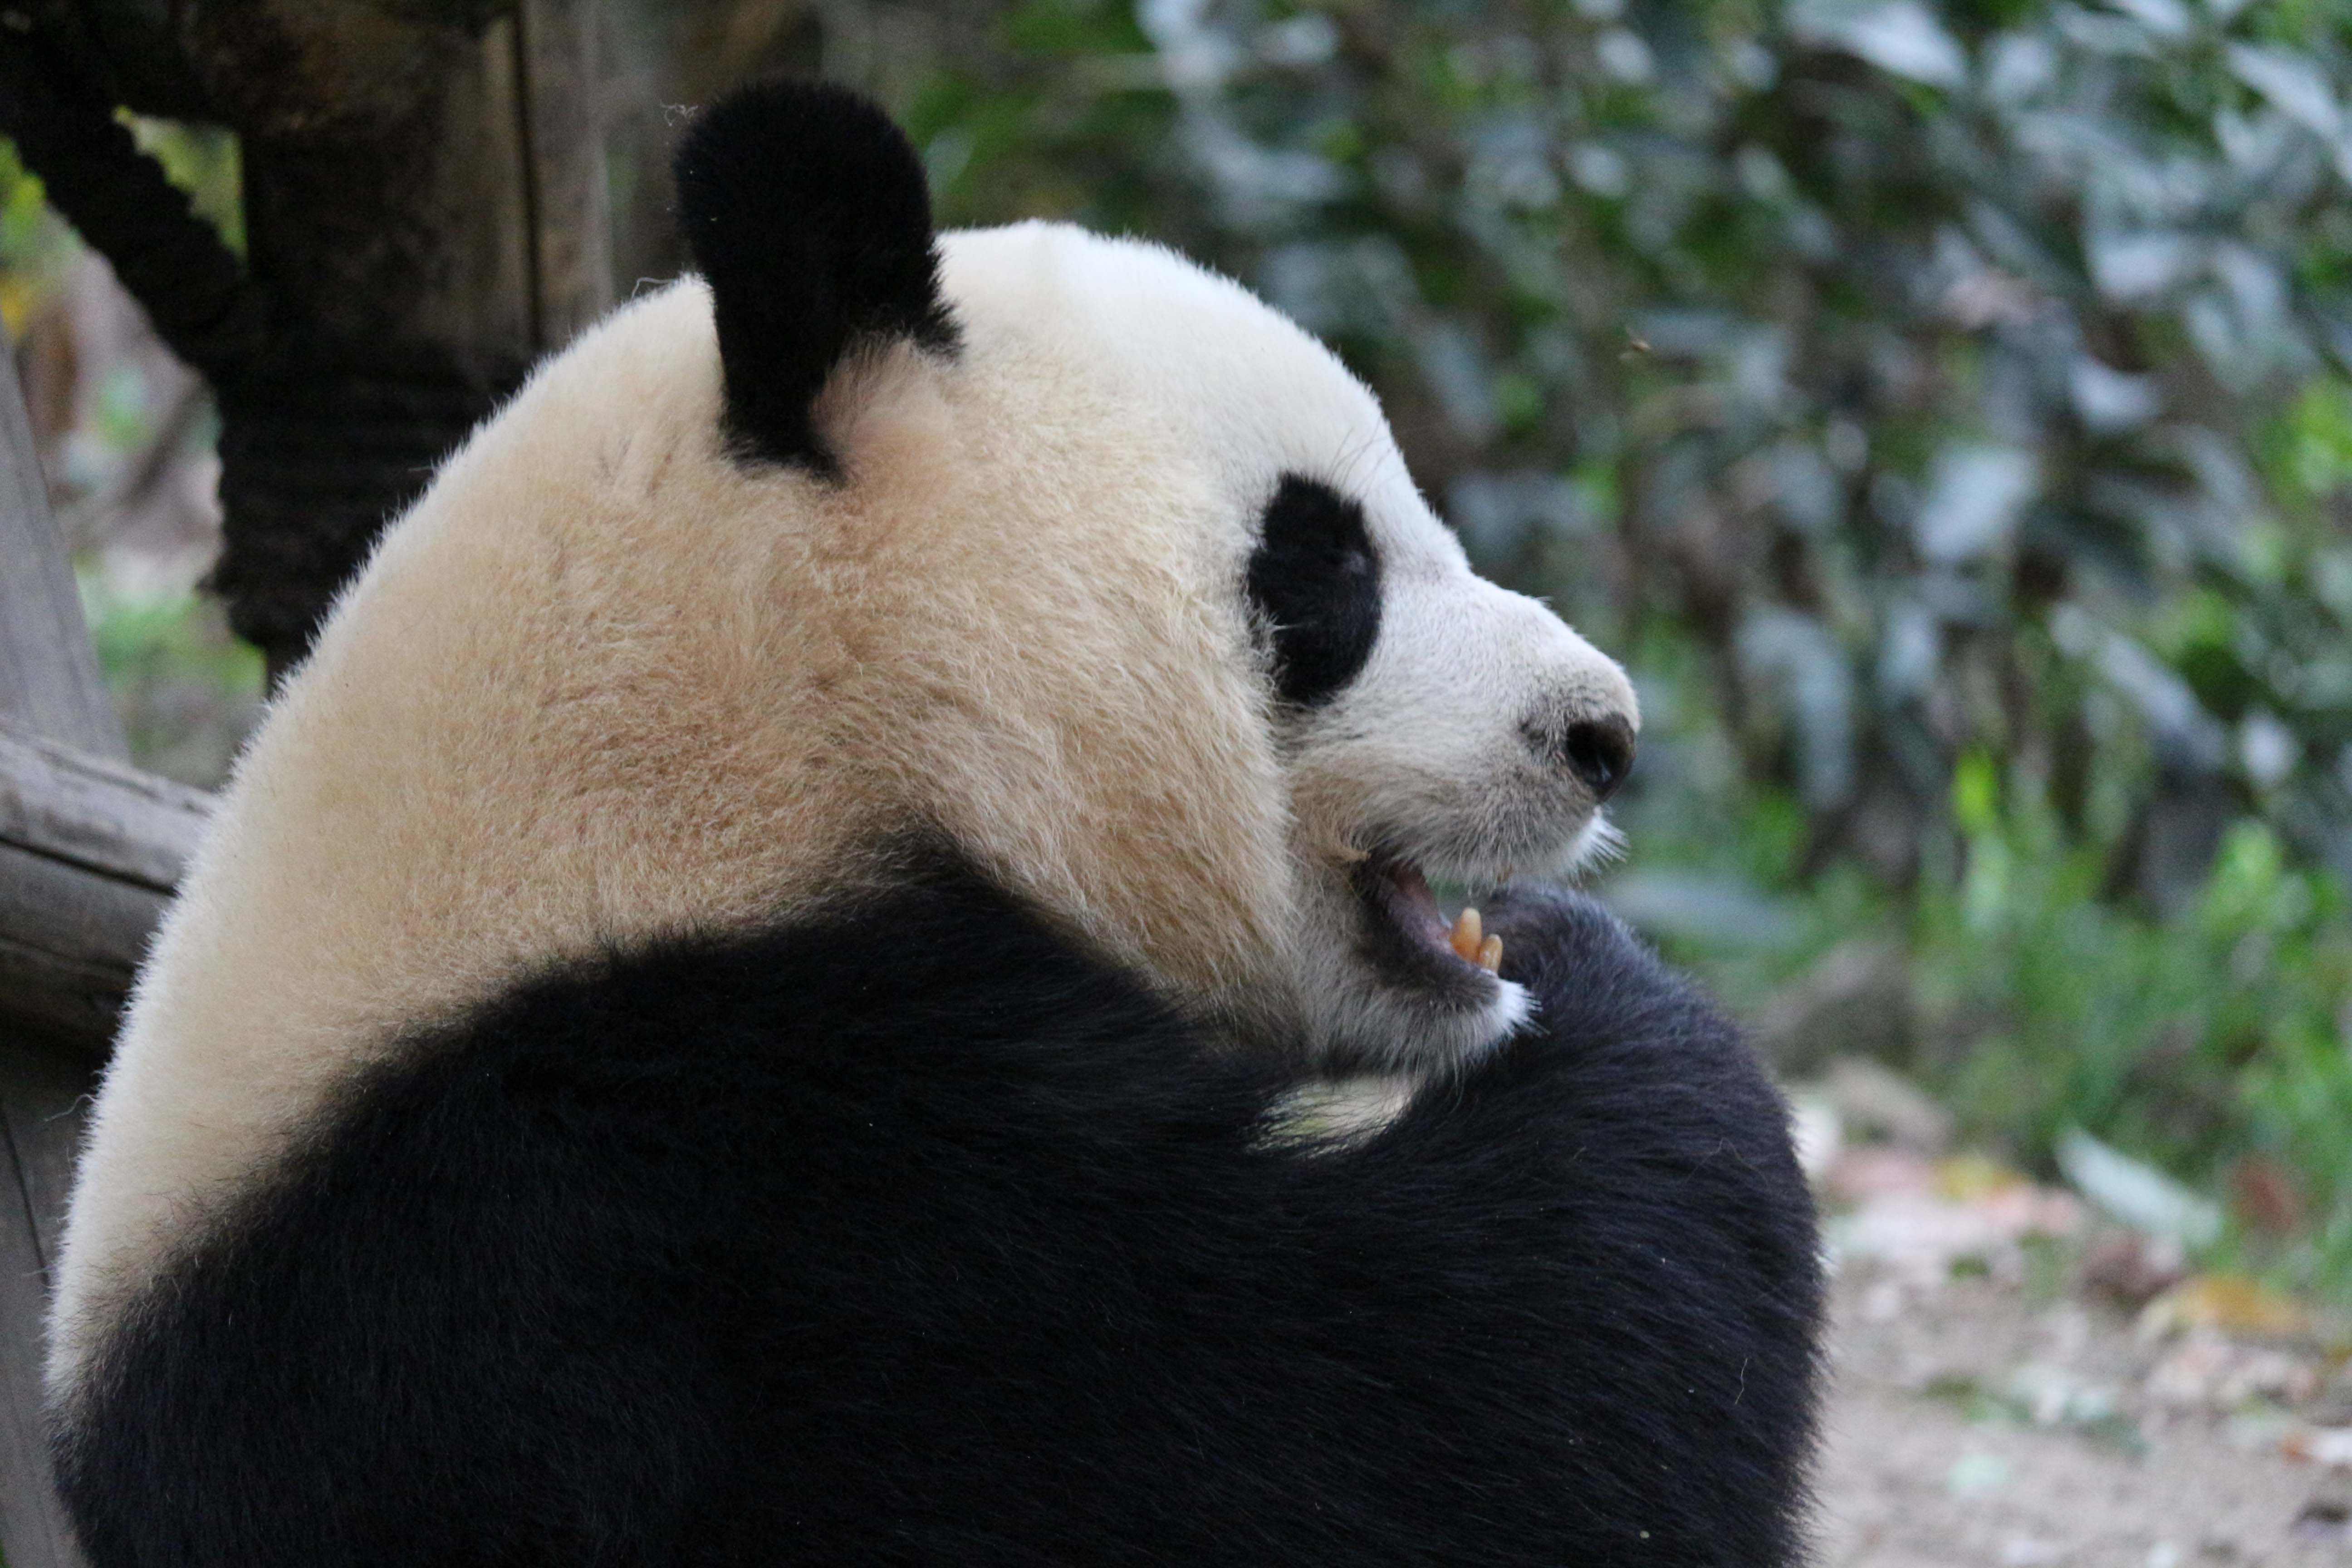 laughing panda in Chengdu